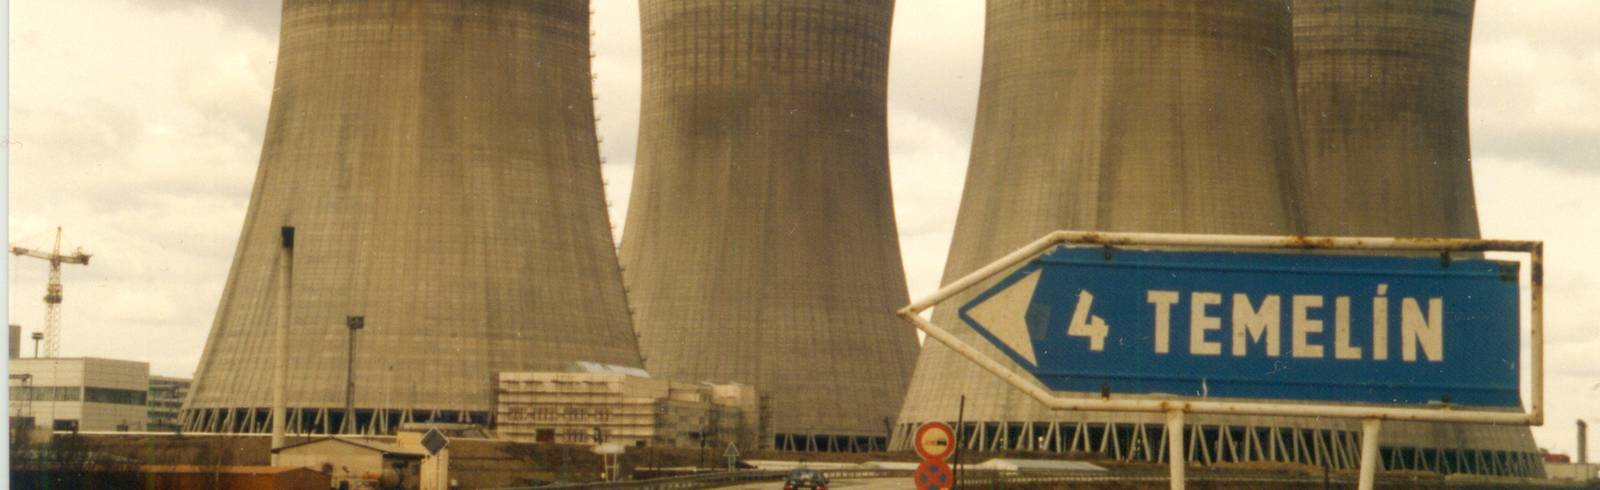 Temelin: Reaktorblock nach Störfall vom Netz